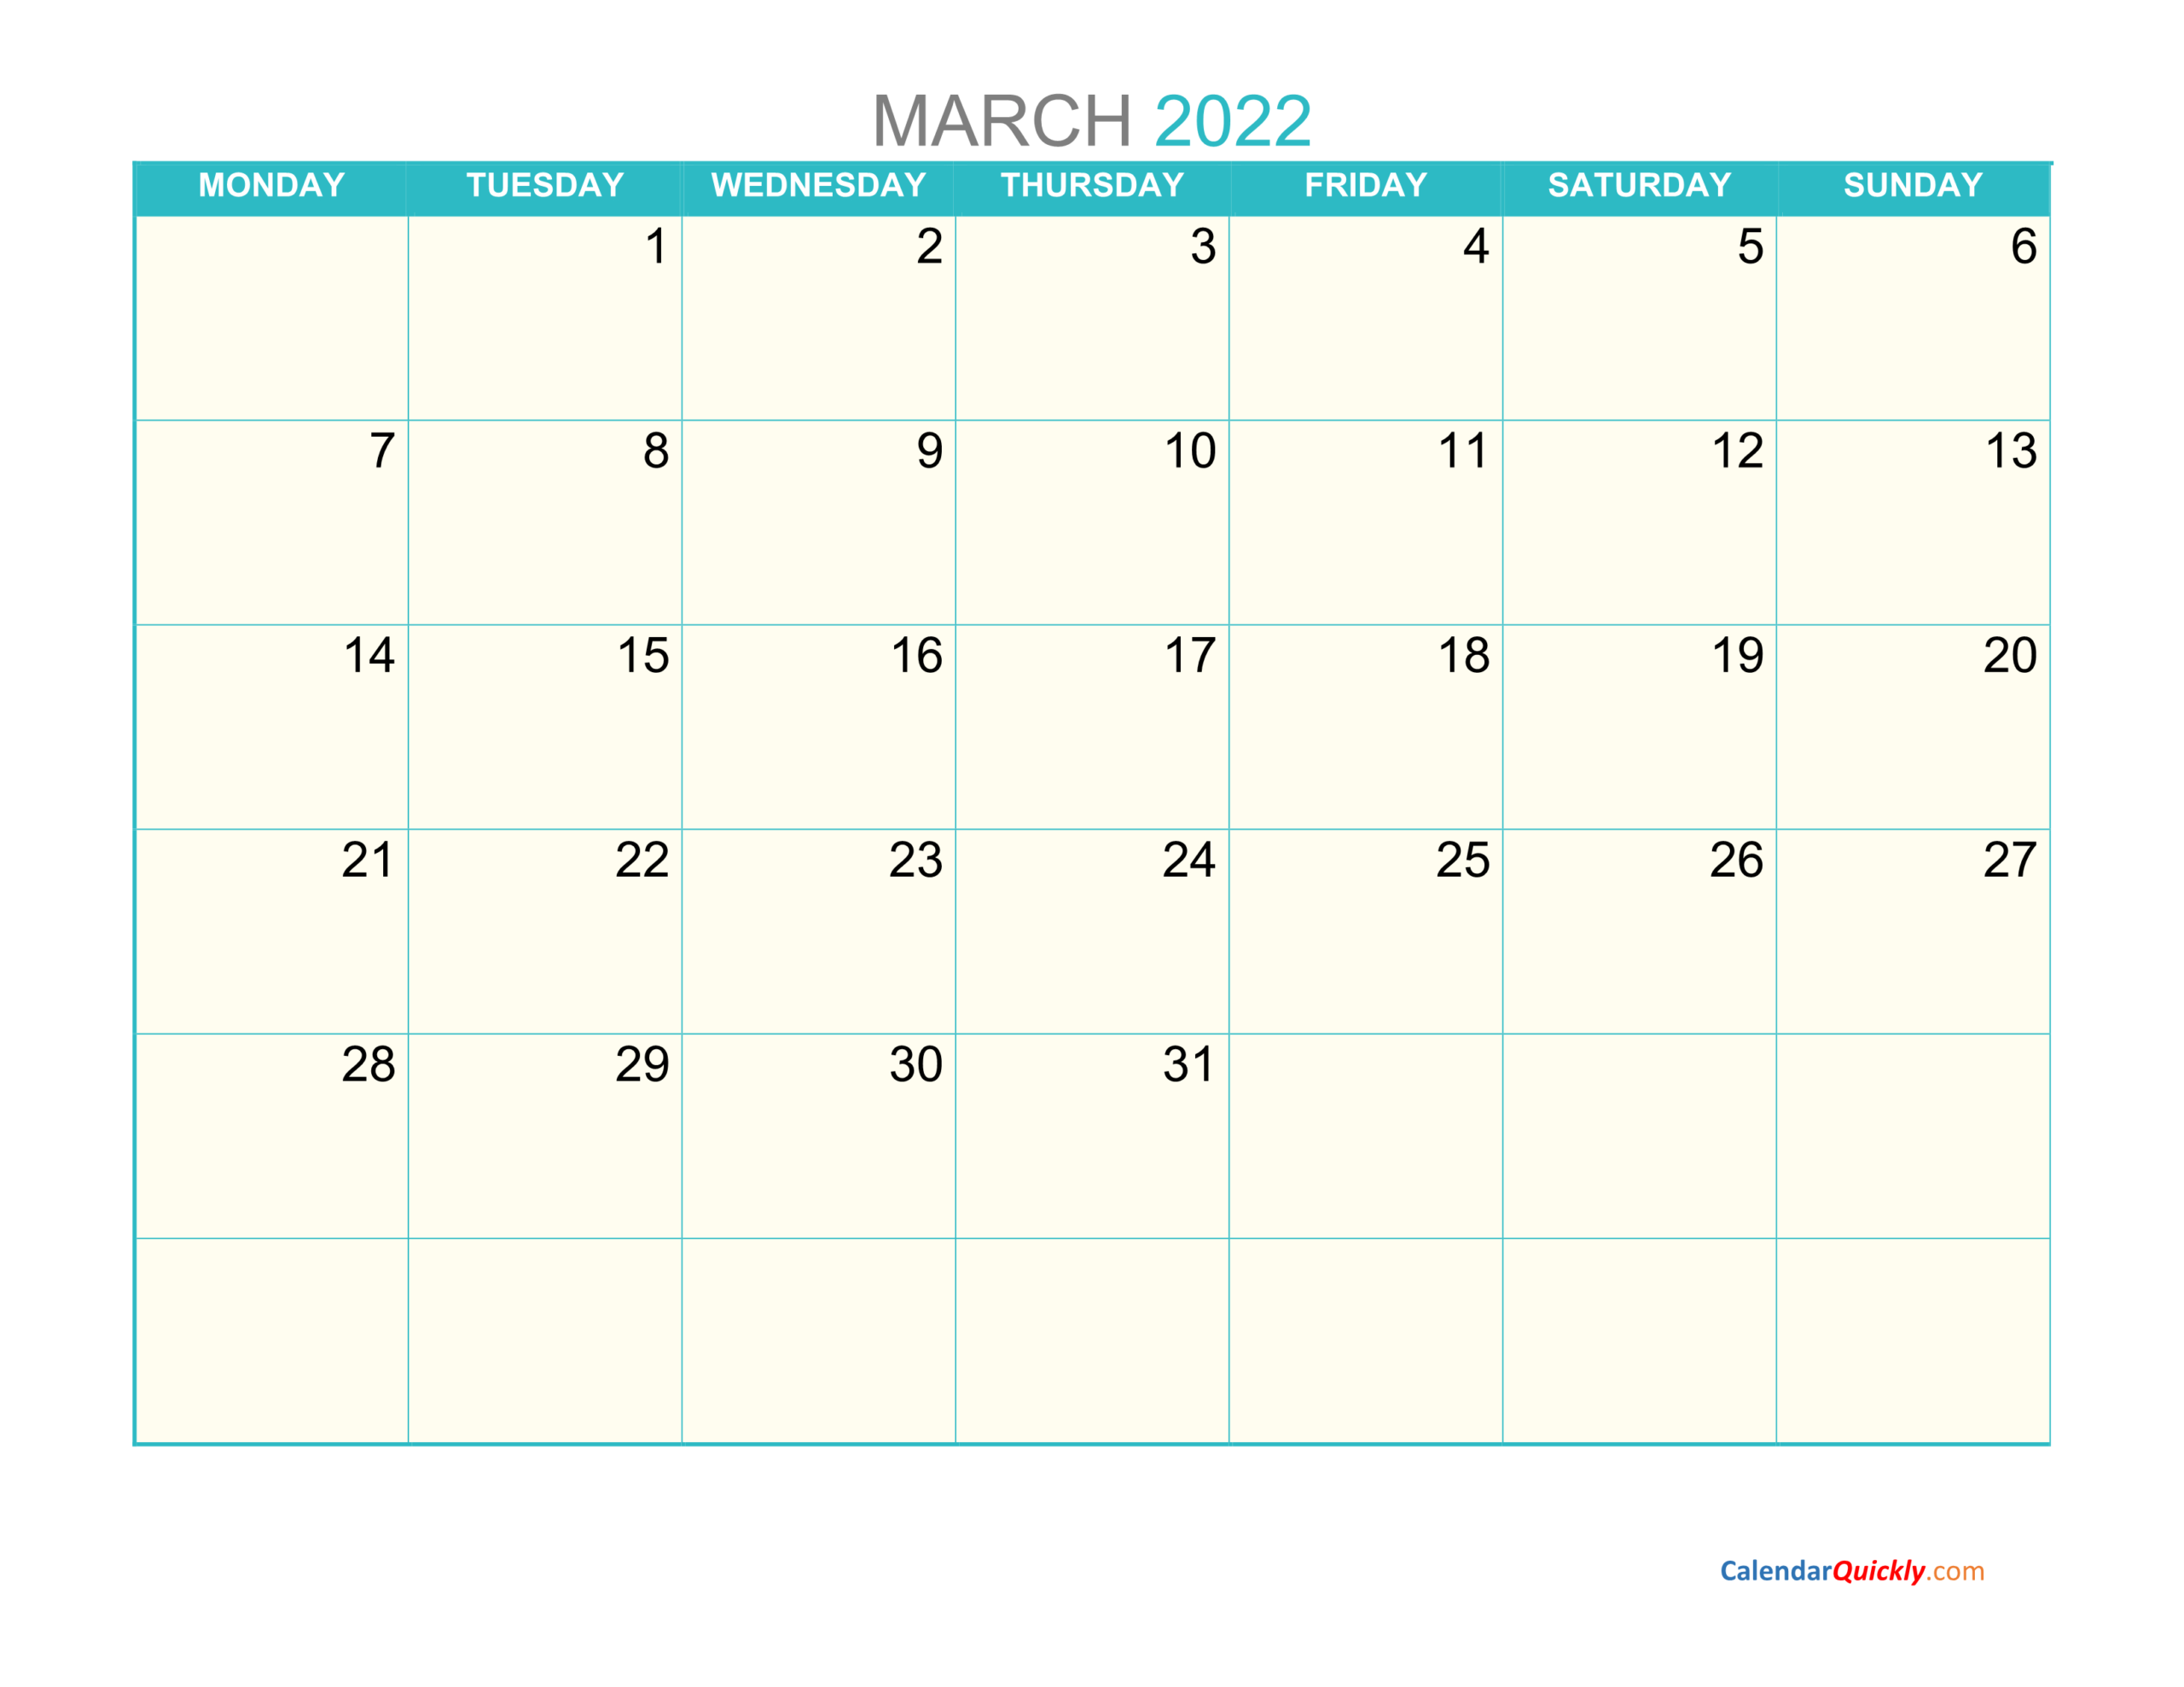 Get Calendar 2022 Hindi March